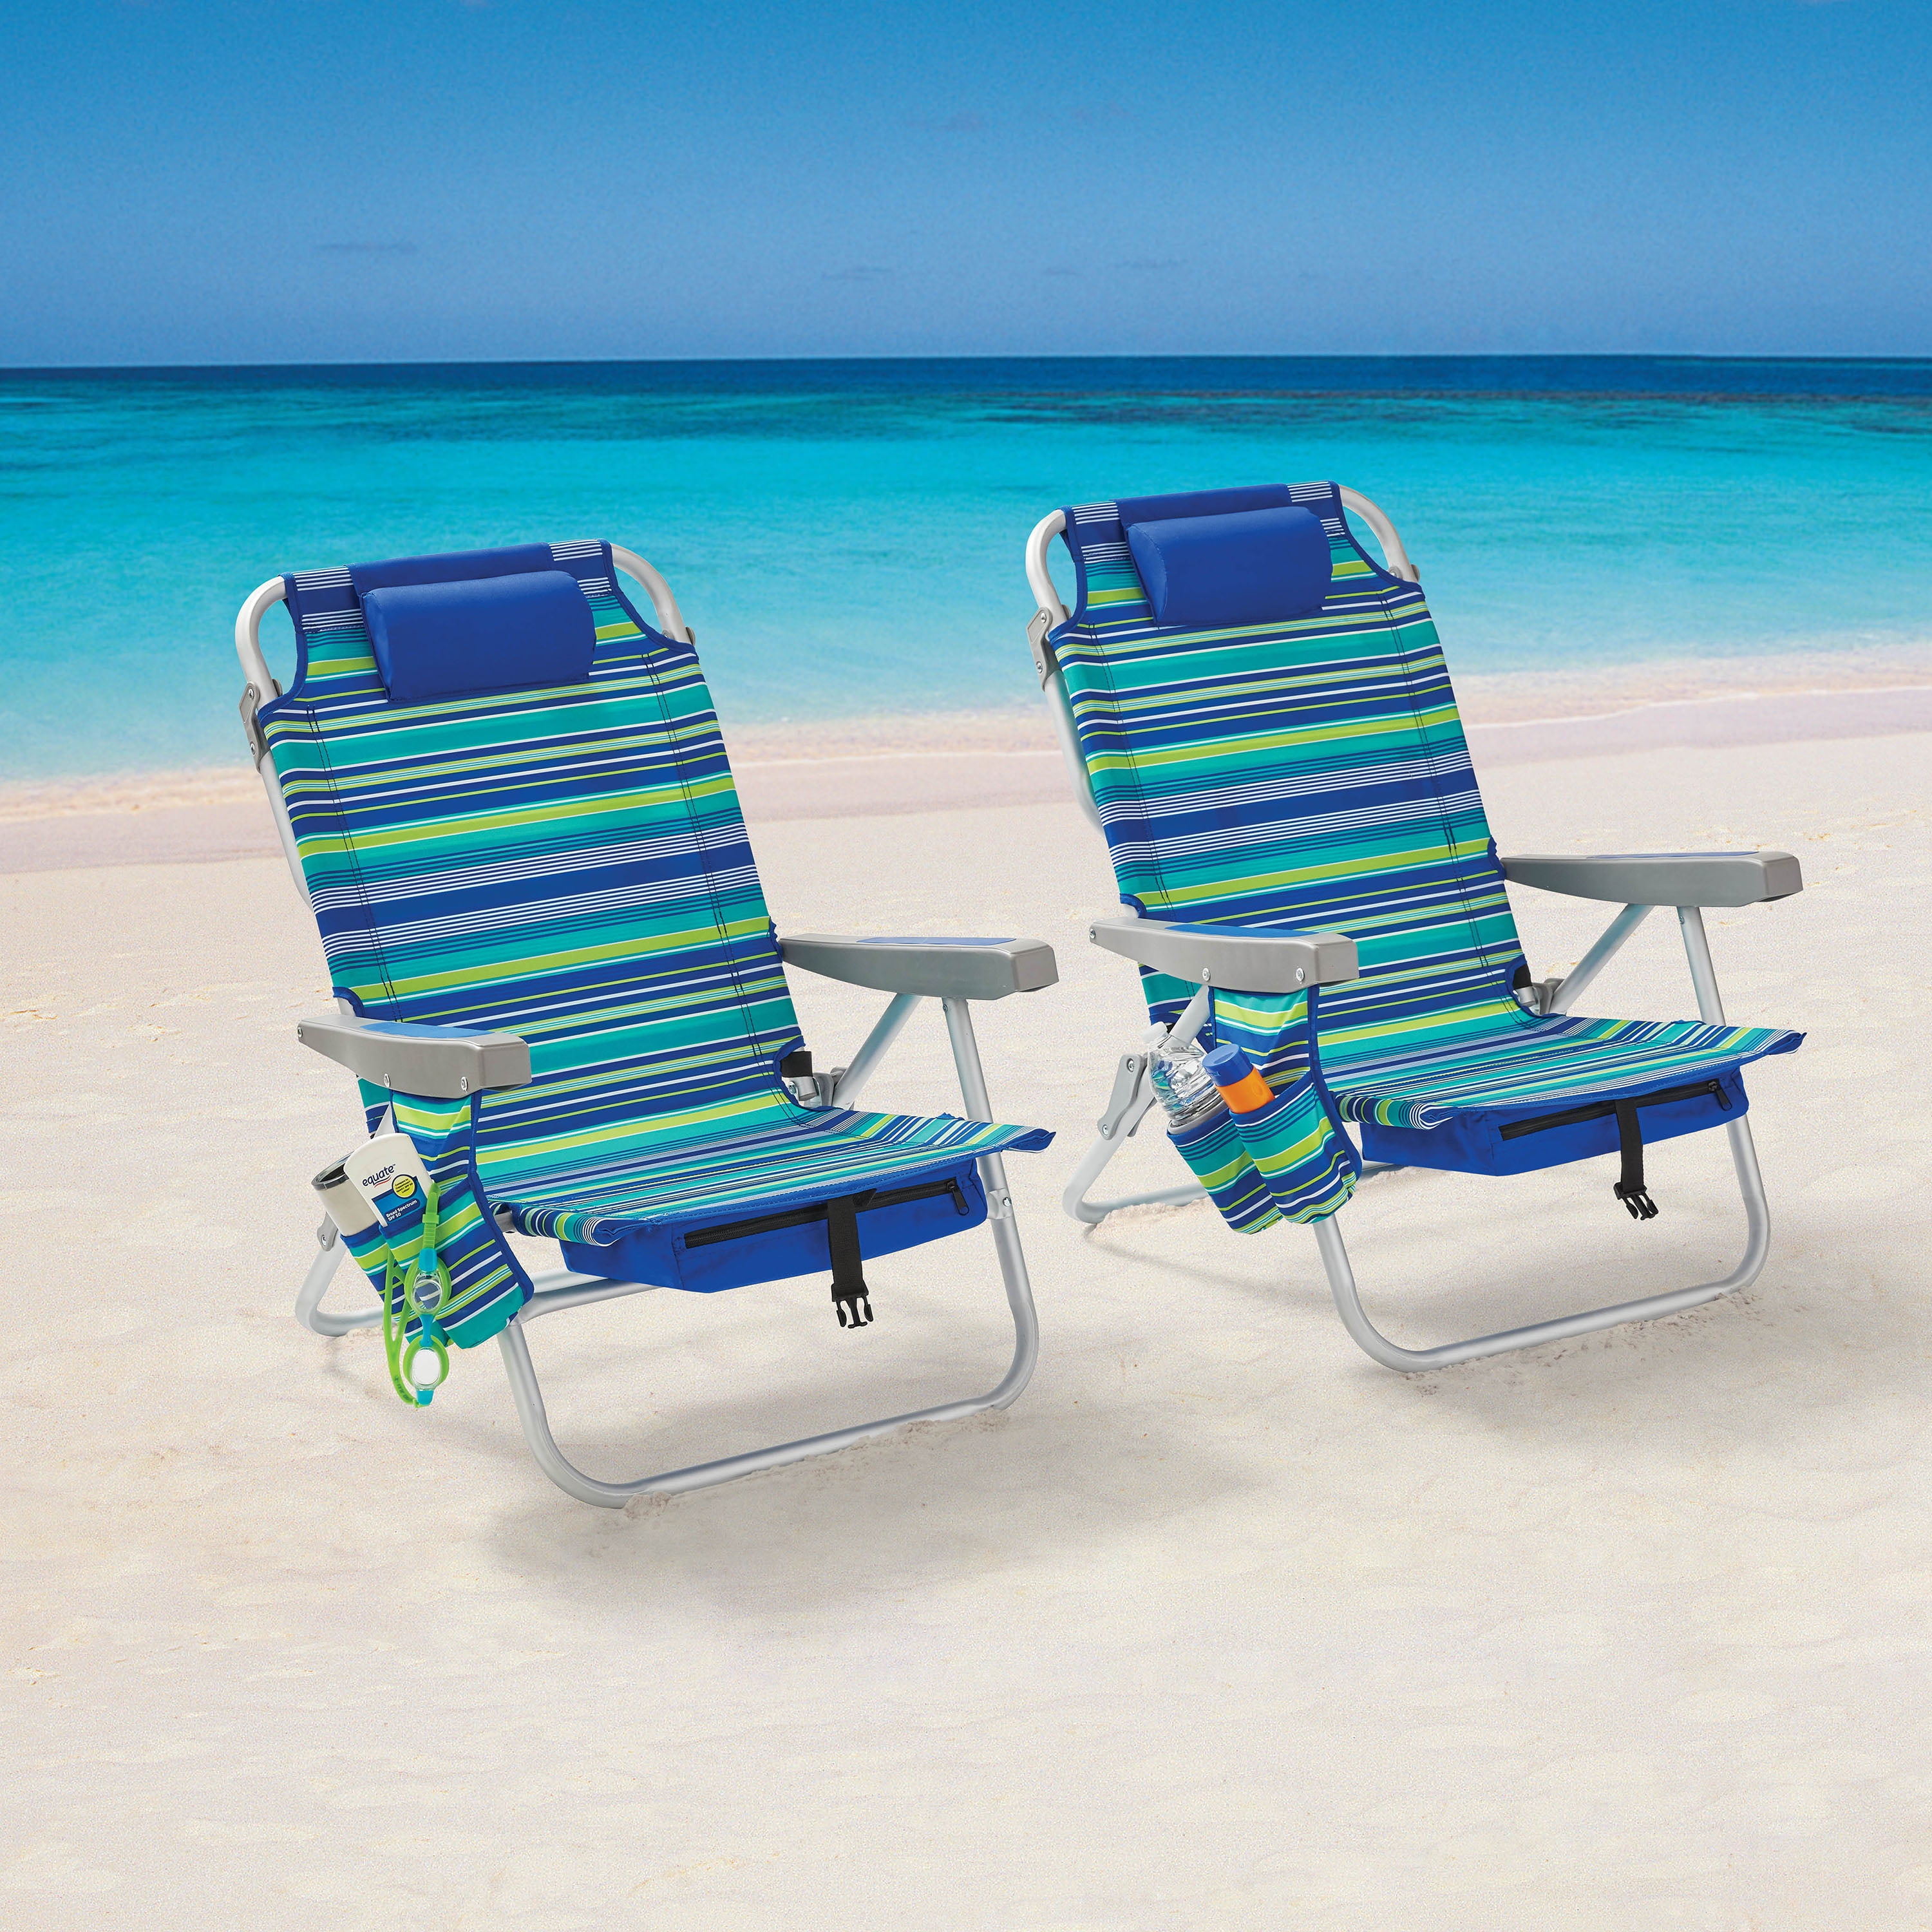  Lay Flat Beach Chair with Simple Decor